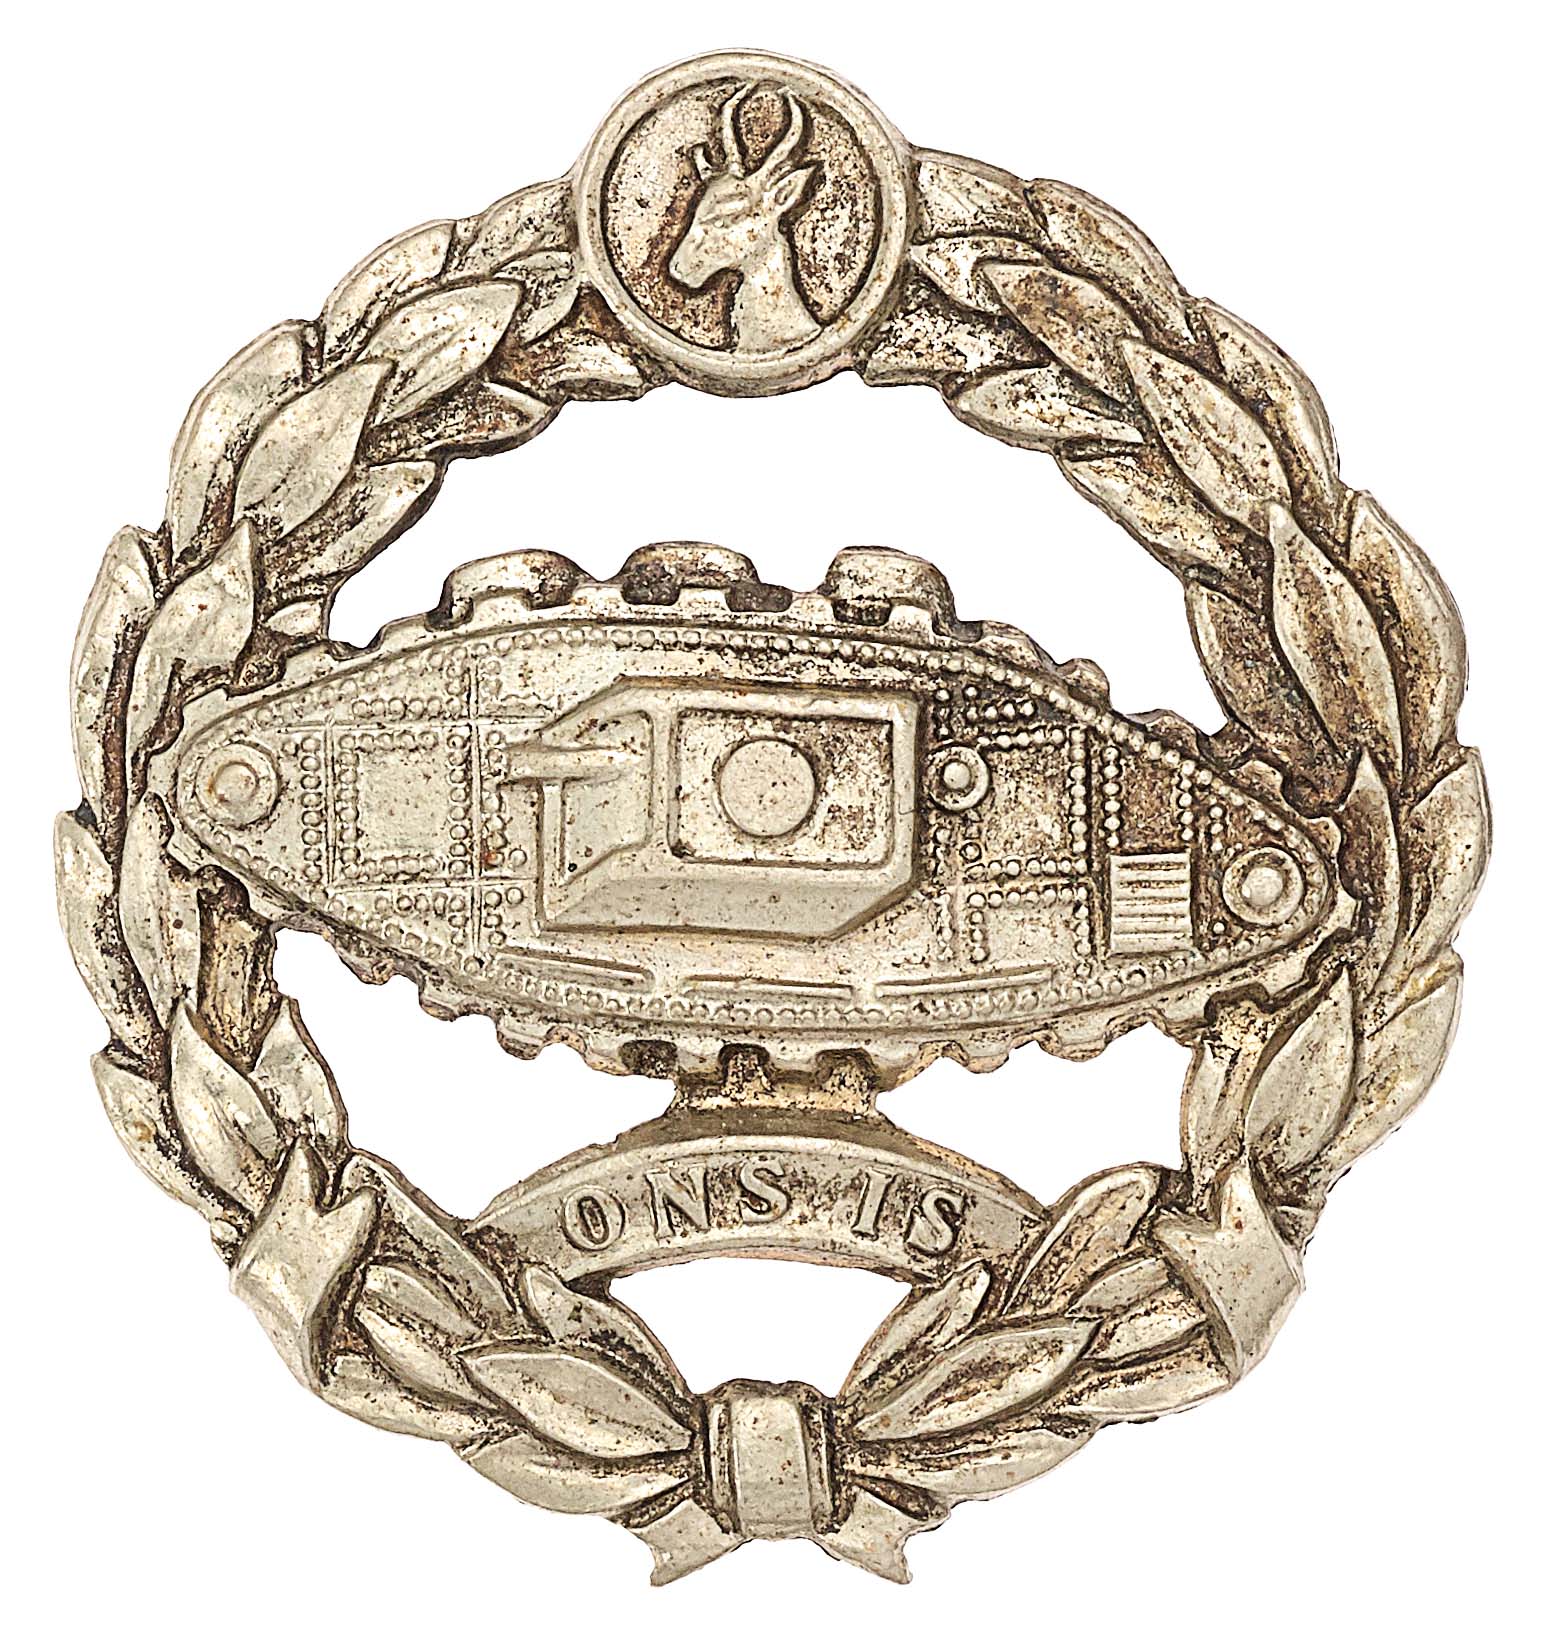 South Africa Tank Corps WW2 beret badge circa 1941-43.